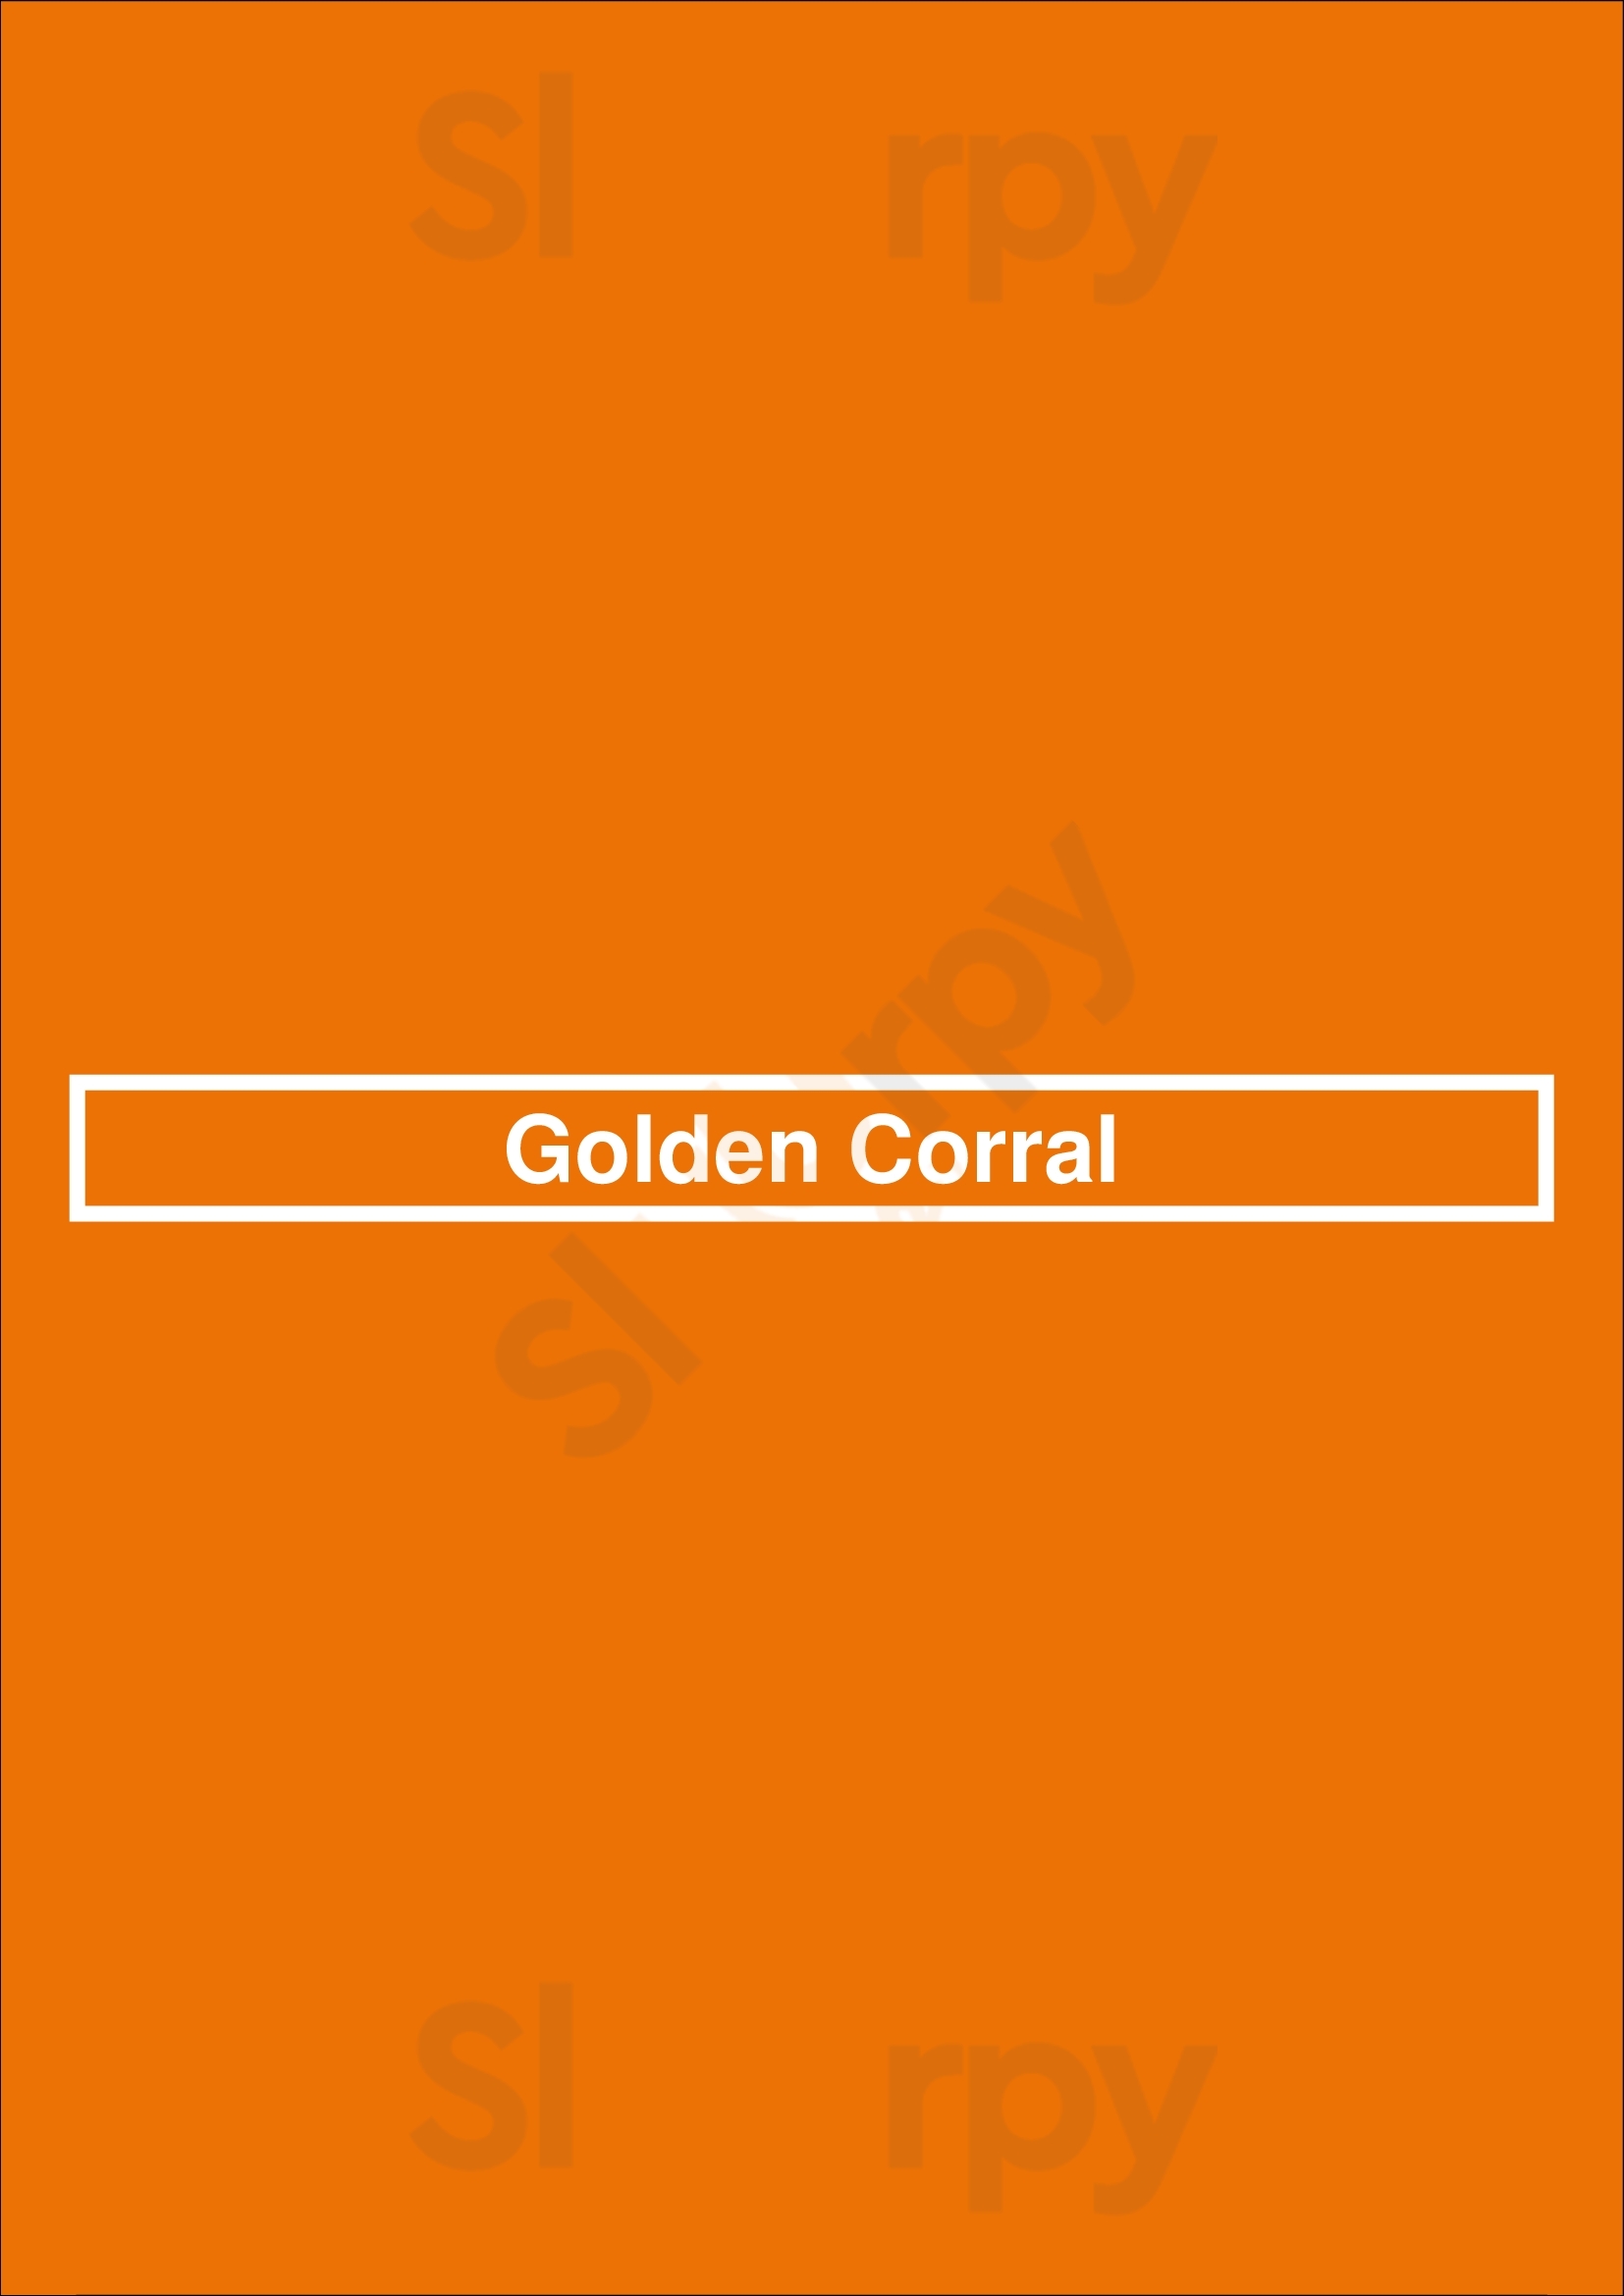 Golden Corral Louisville Menu - 1